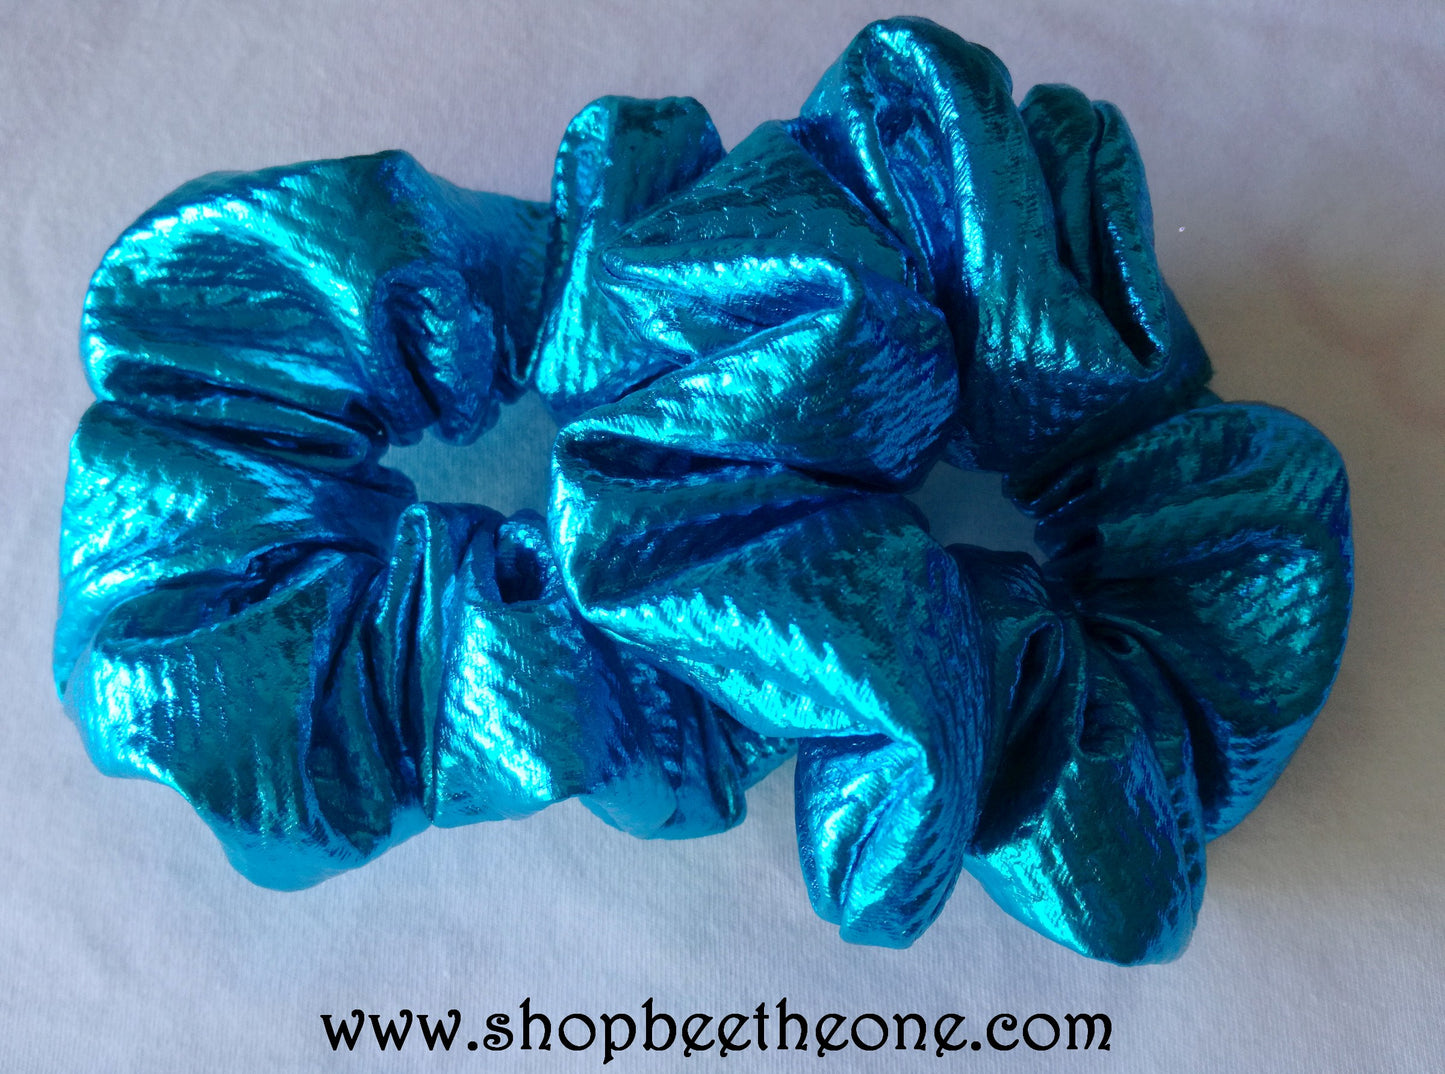 Chouchou élastique tissu métallique gaufré - 3 couleurs - Marque Zambara